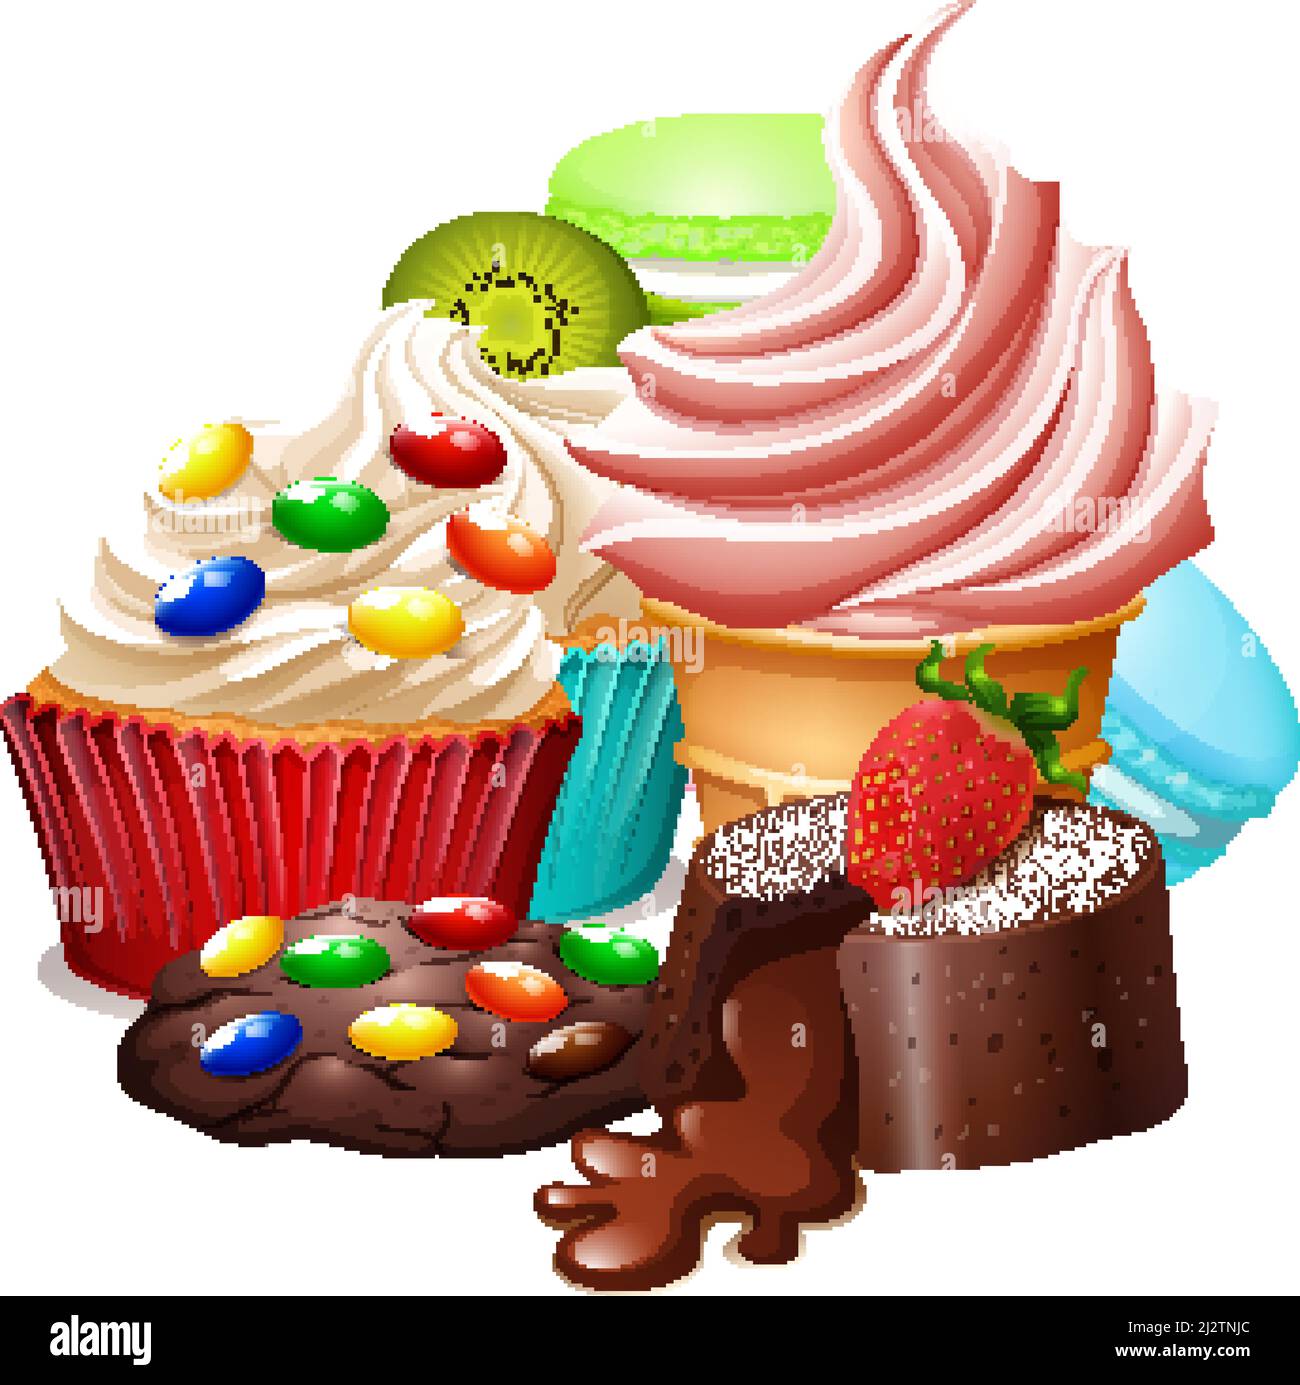 https://c8.alamy.com/comp/2J2TNJC/sweet-bakery-dessert-on-white-background-illustration-2J2TNJC.jpg